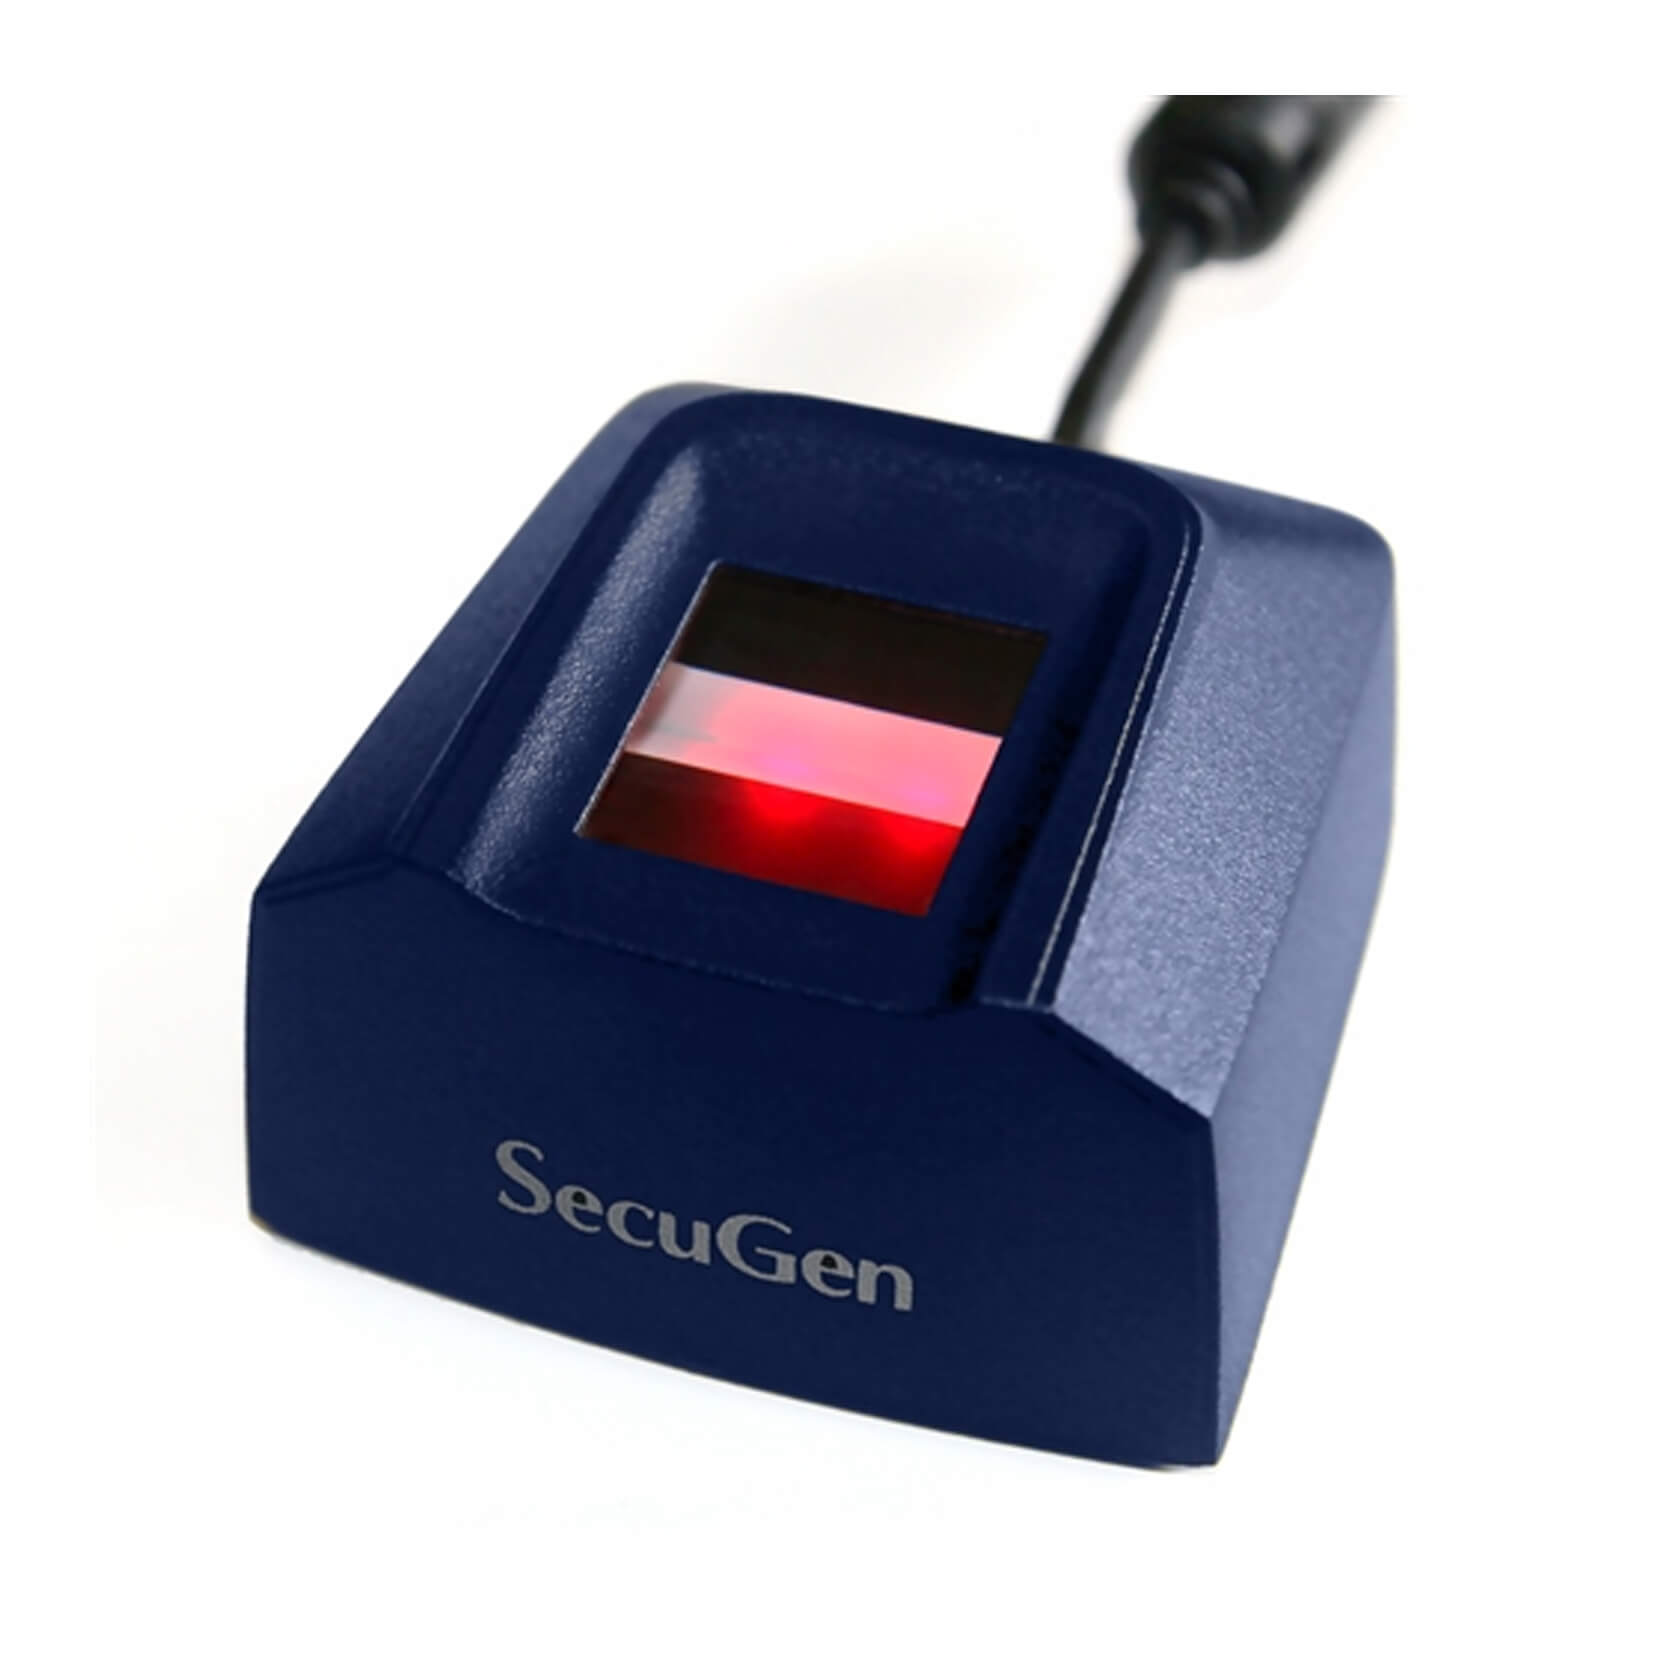 SecuGen Hamster pro biometric scanner